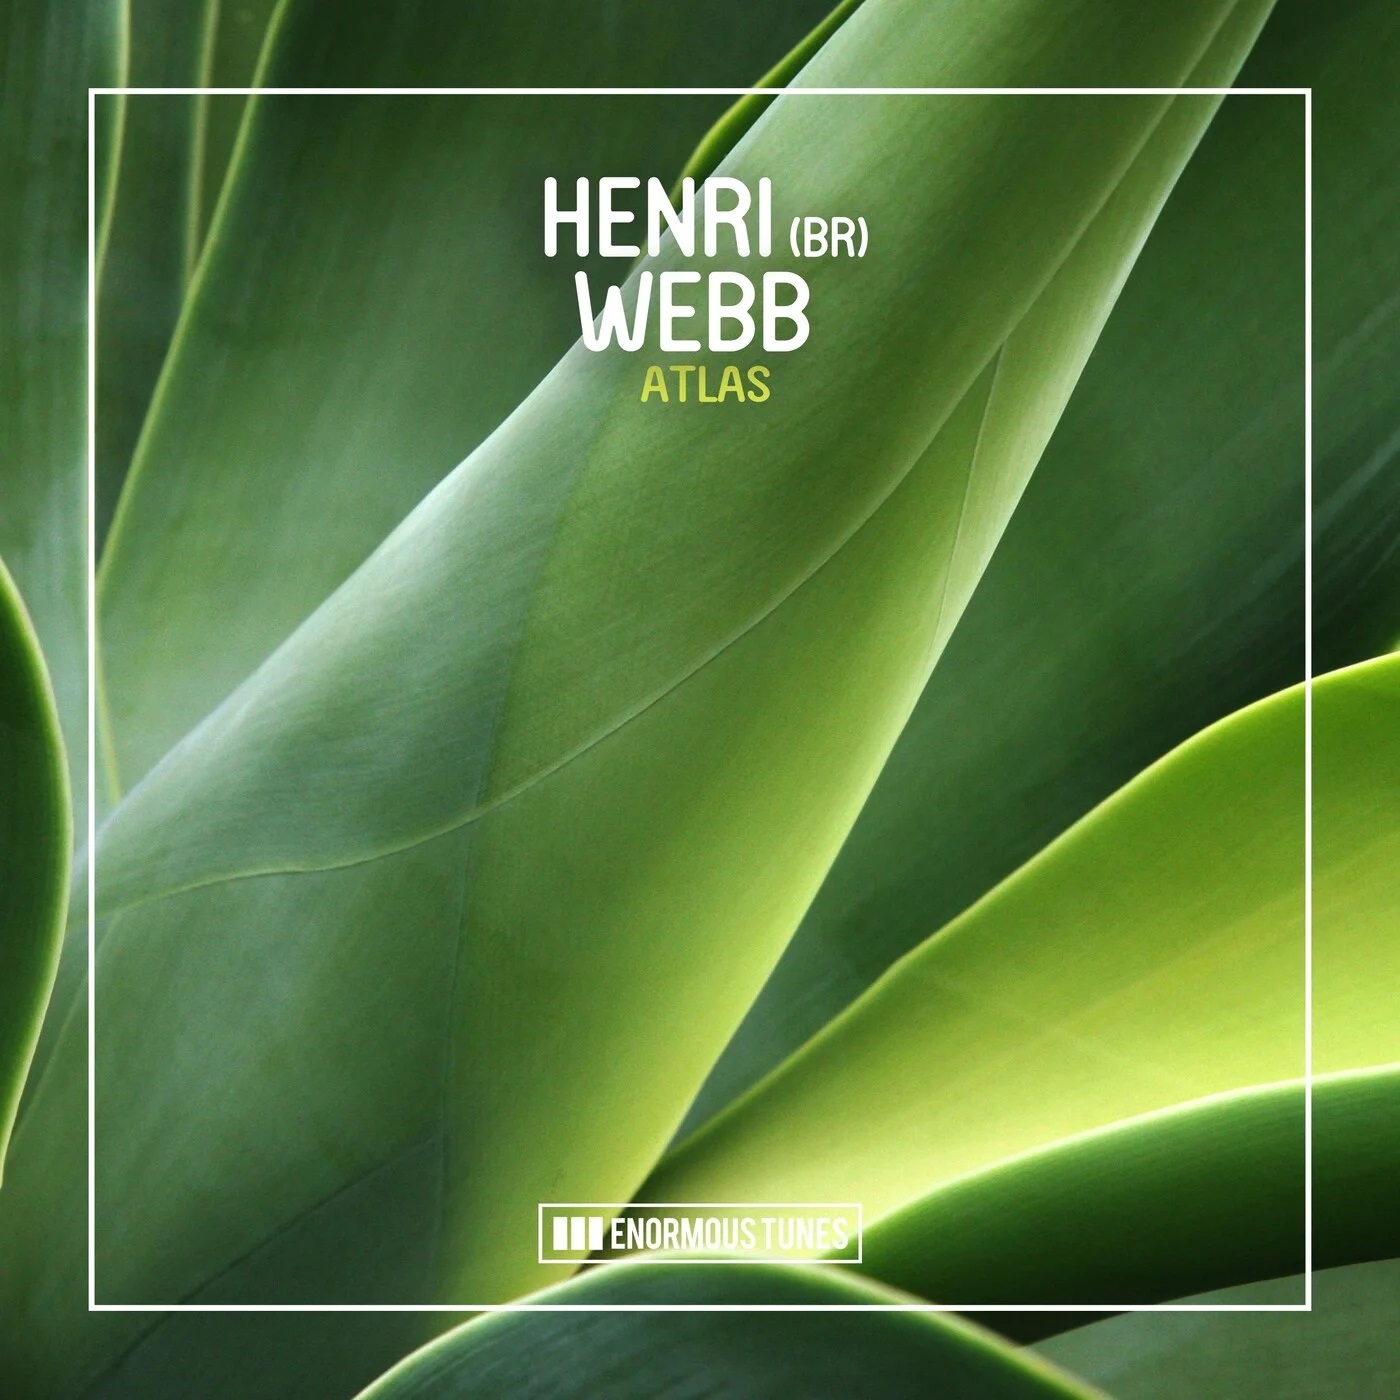 Henri (BR), Webb (br) - Atlas (Extended Mix)